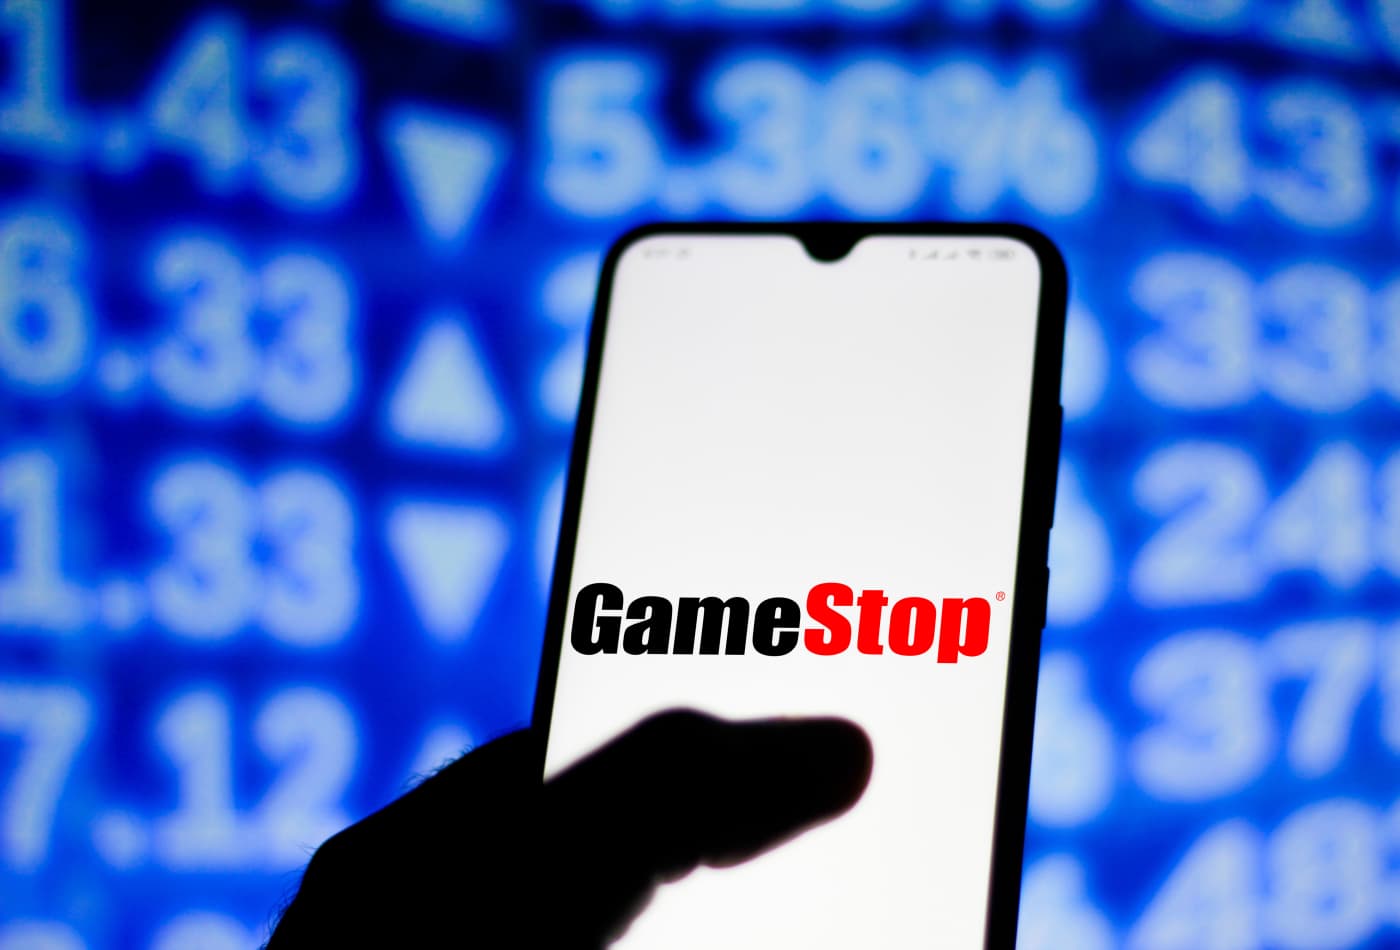 Meme stocks GameStop, AMC are popping again as speculative ...